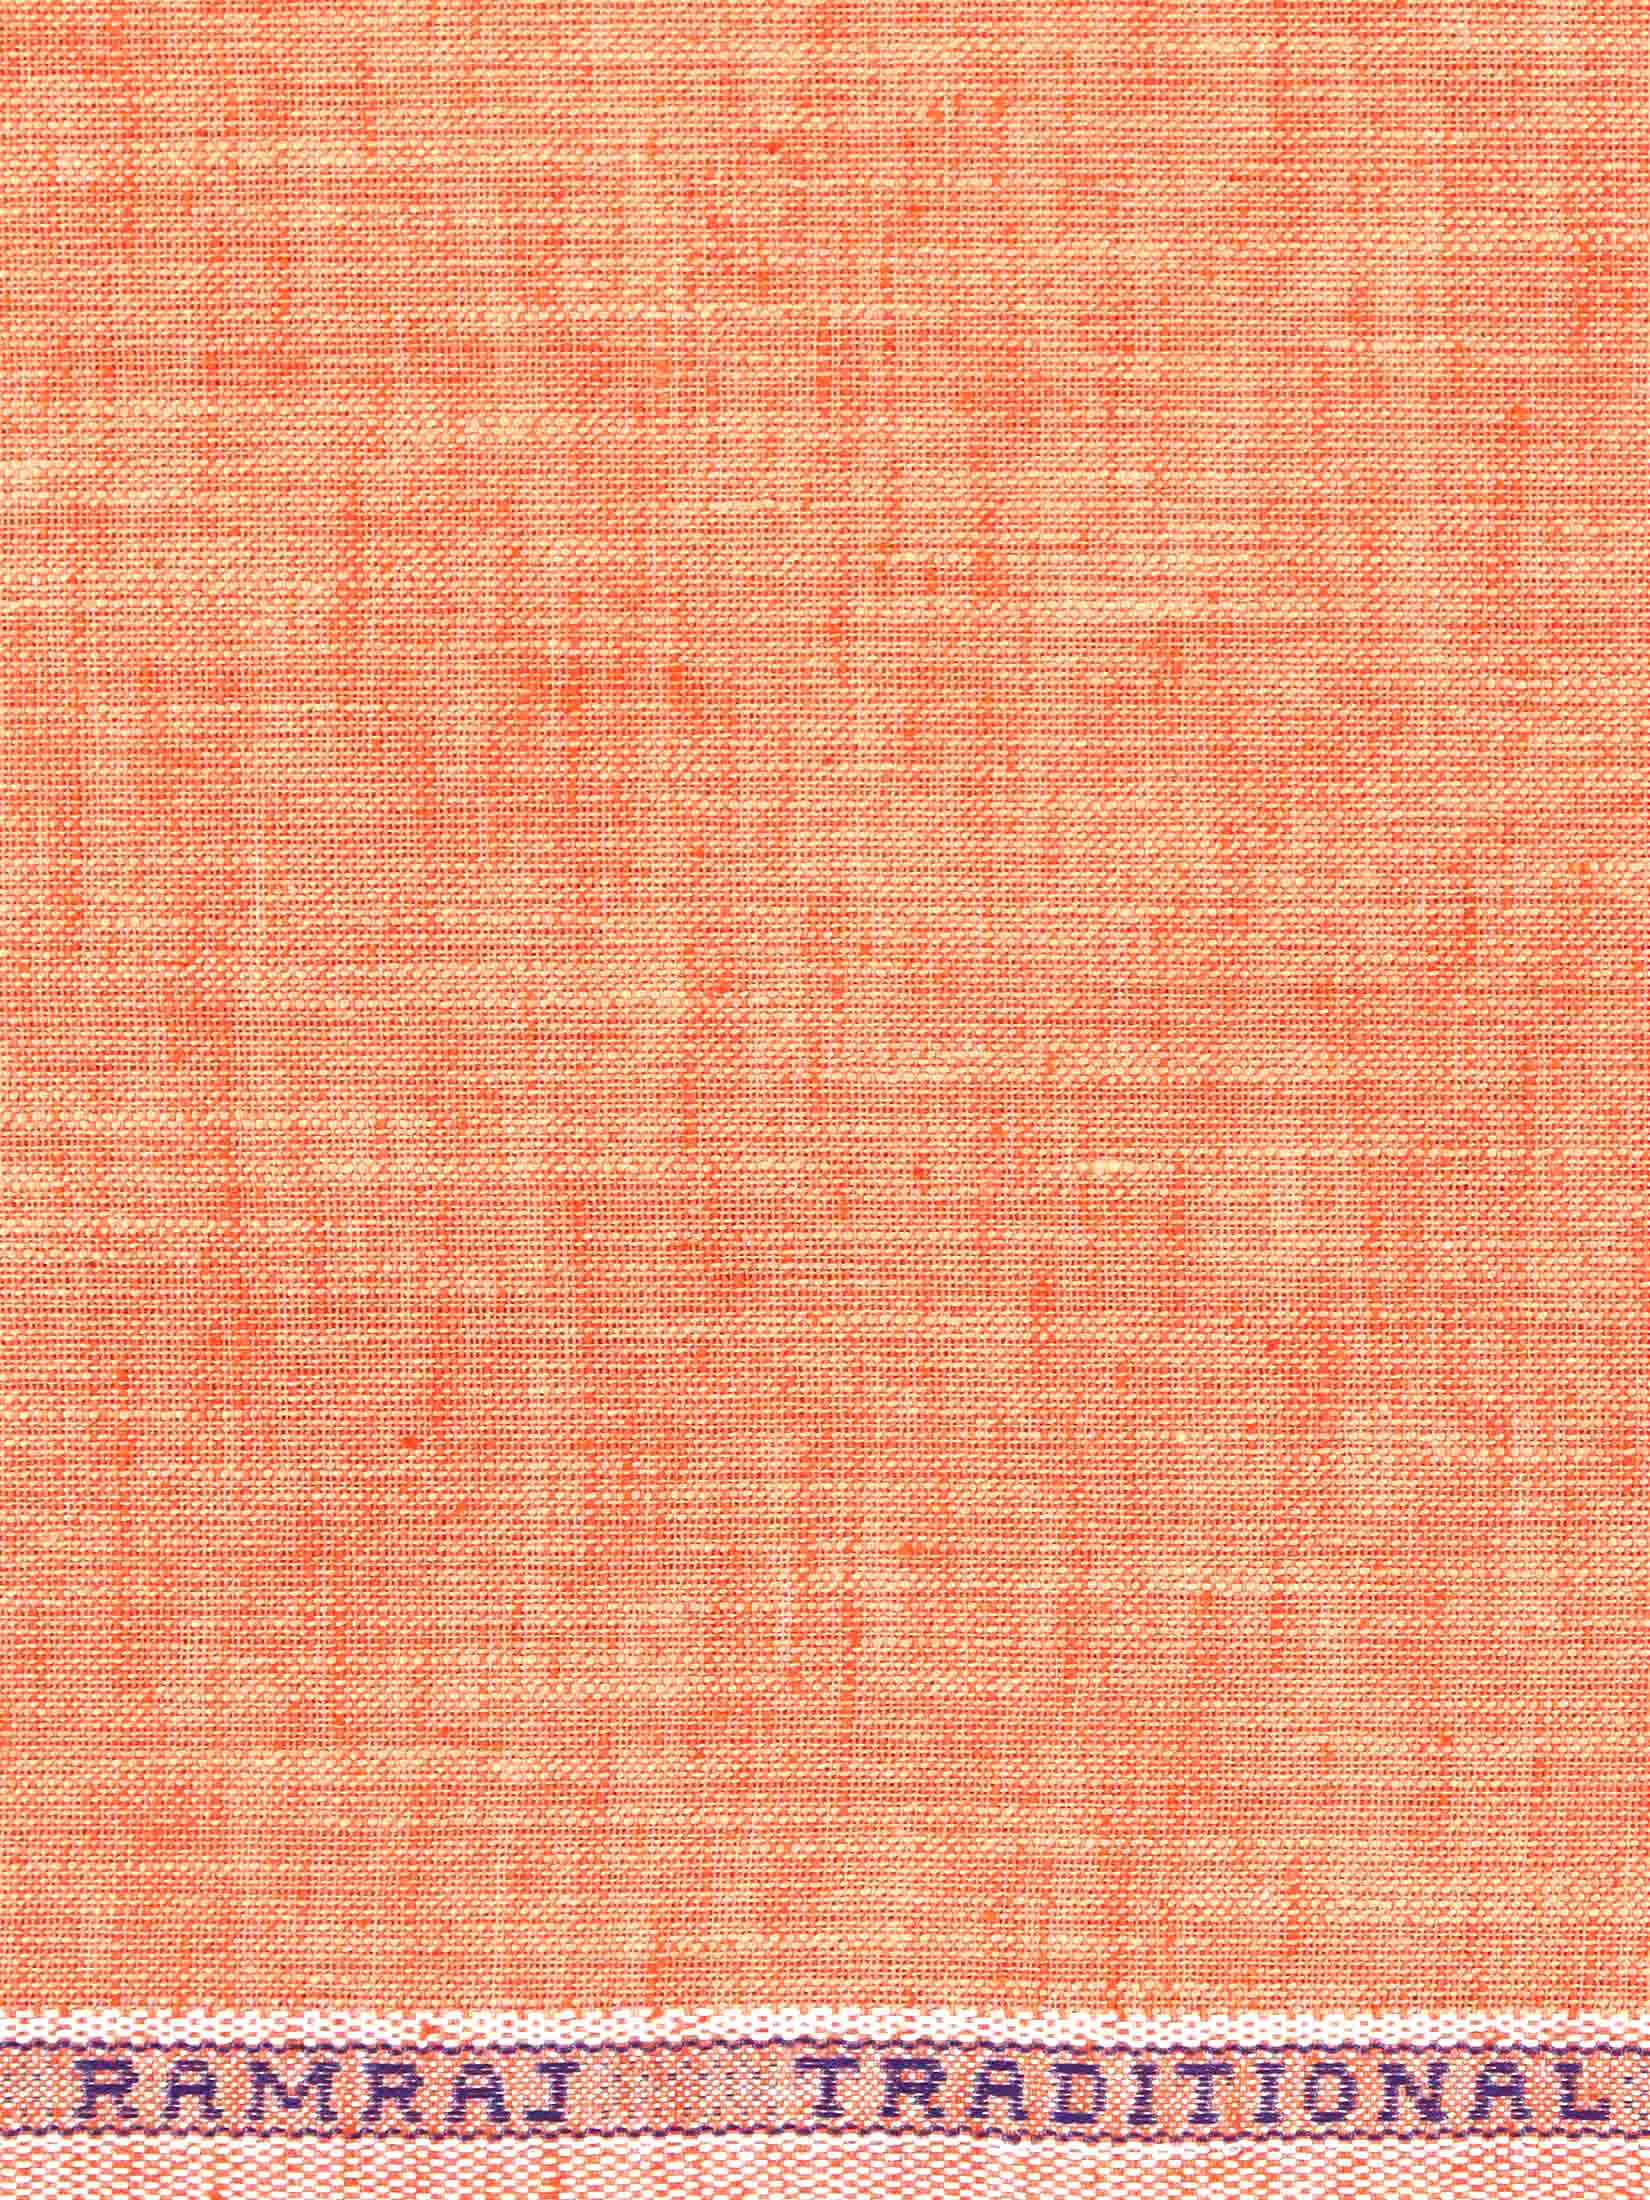 Cotton Blend Lite Orange Colour Kurtha Fabric Lampus - CAPC1160-10